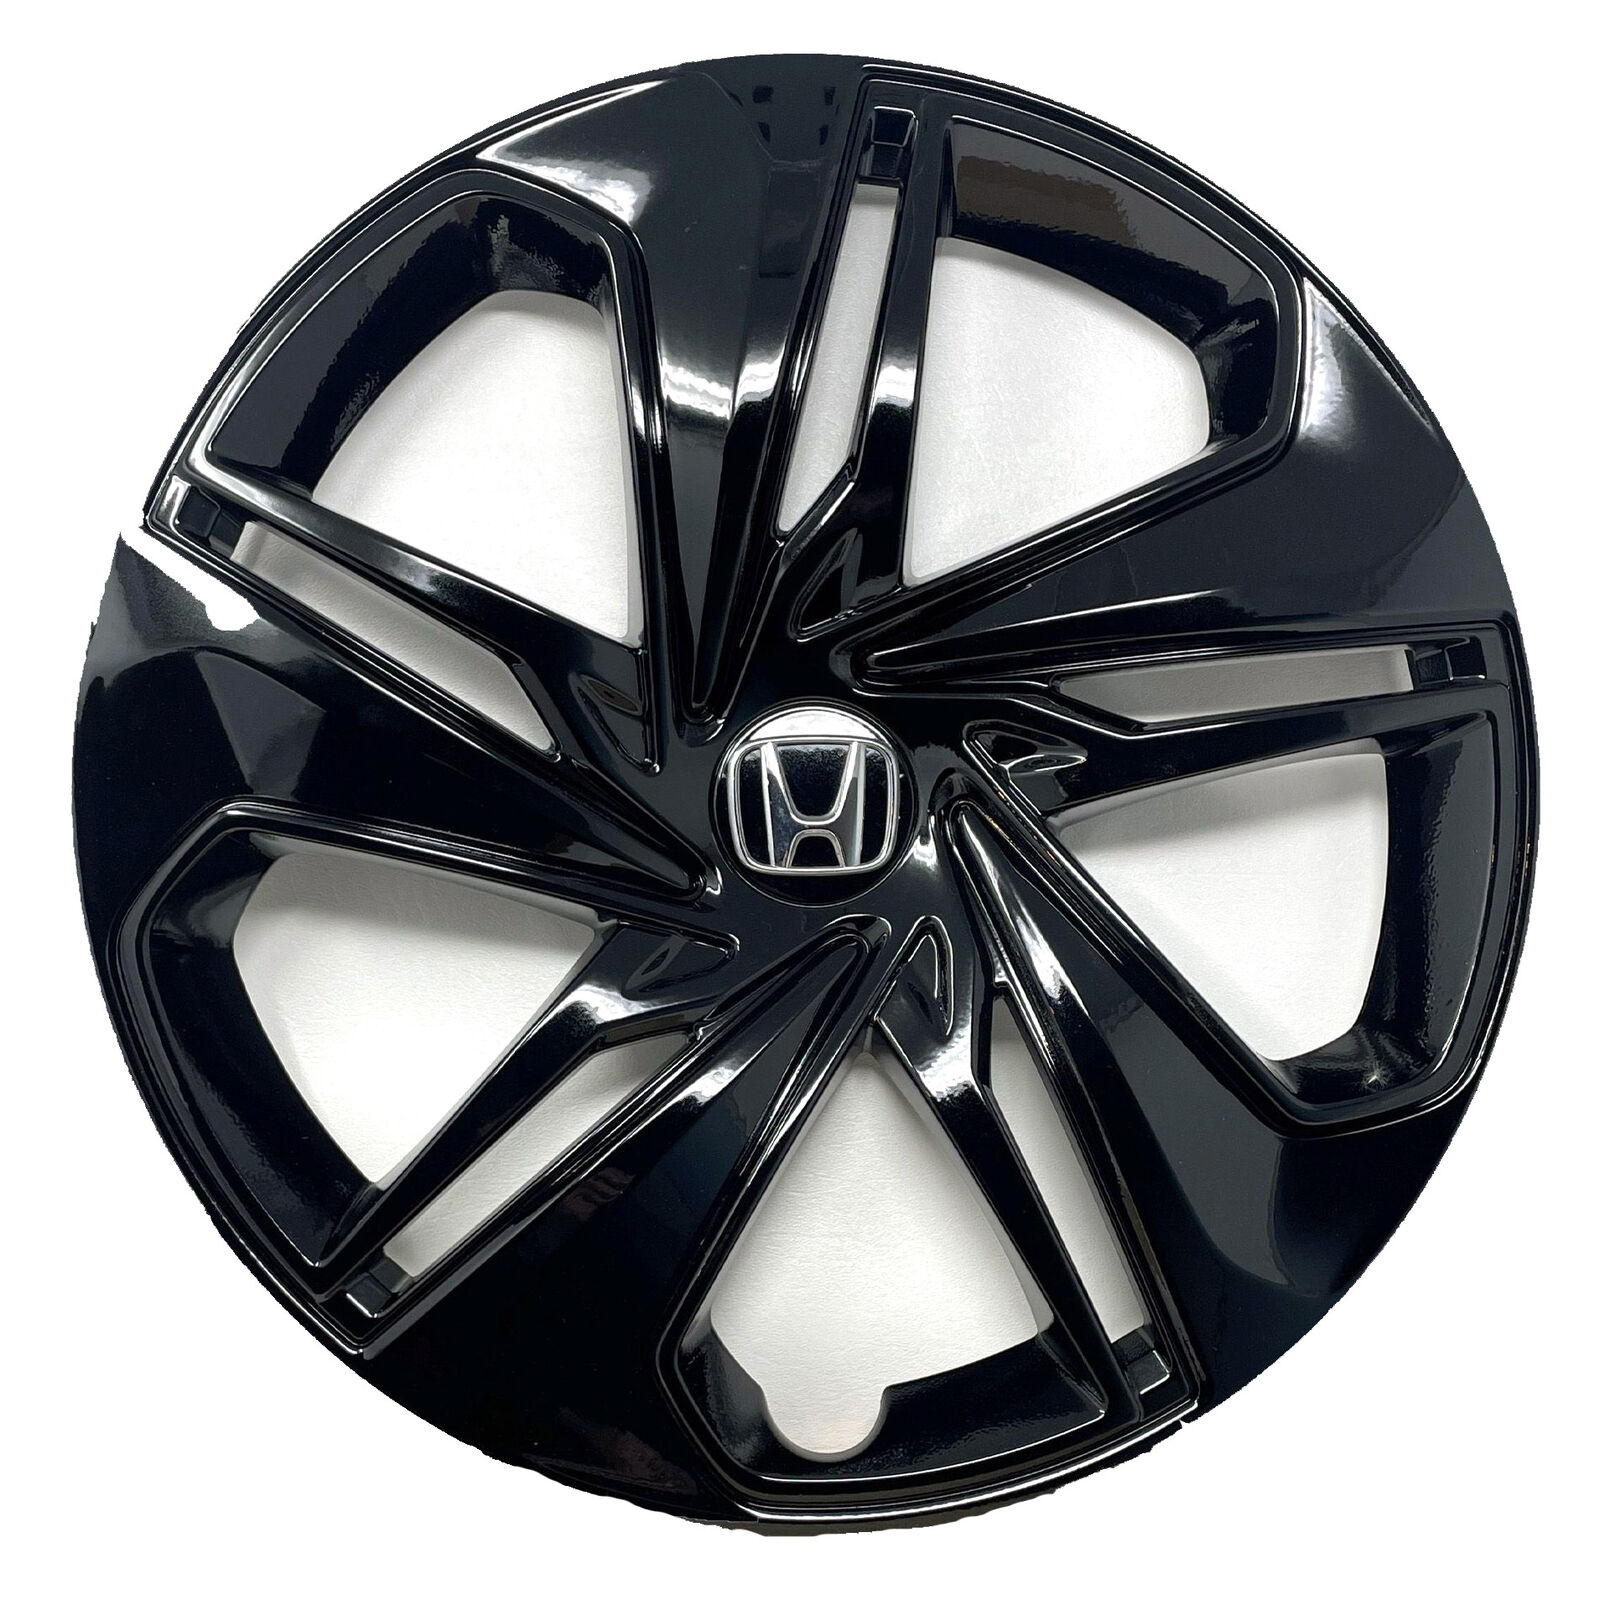 Hubcap for Honda Civic 2016-2021 OEM 16-in Custom Gloss Black Wheel Cover 55103